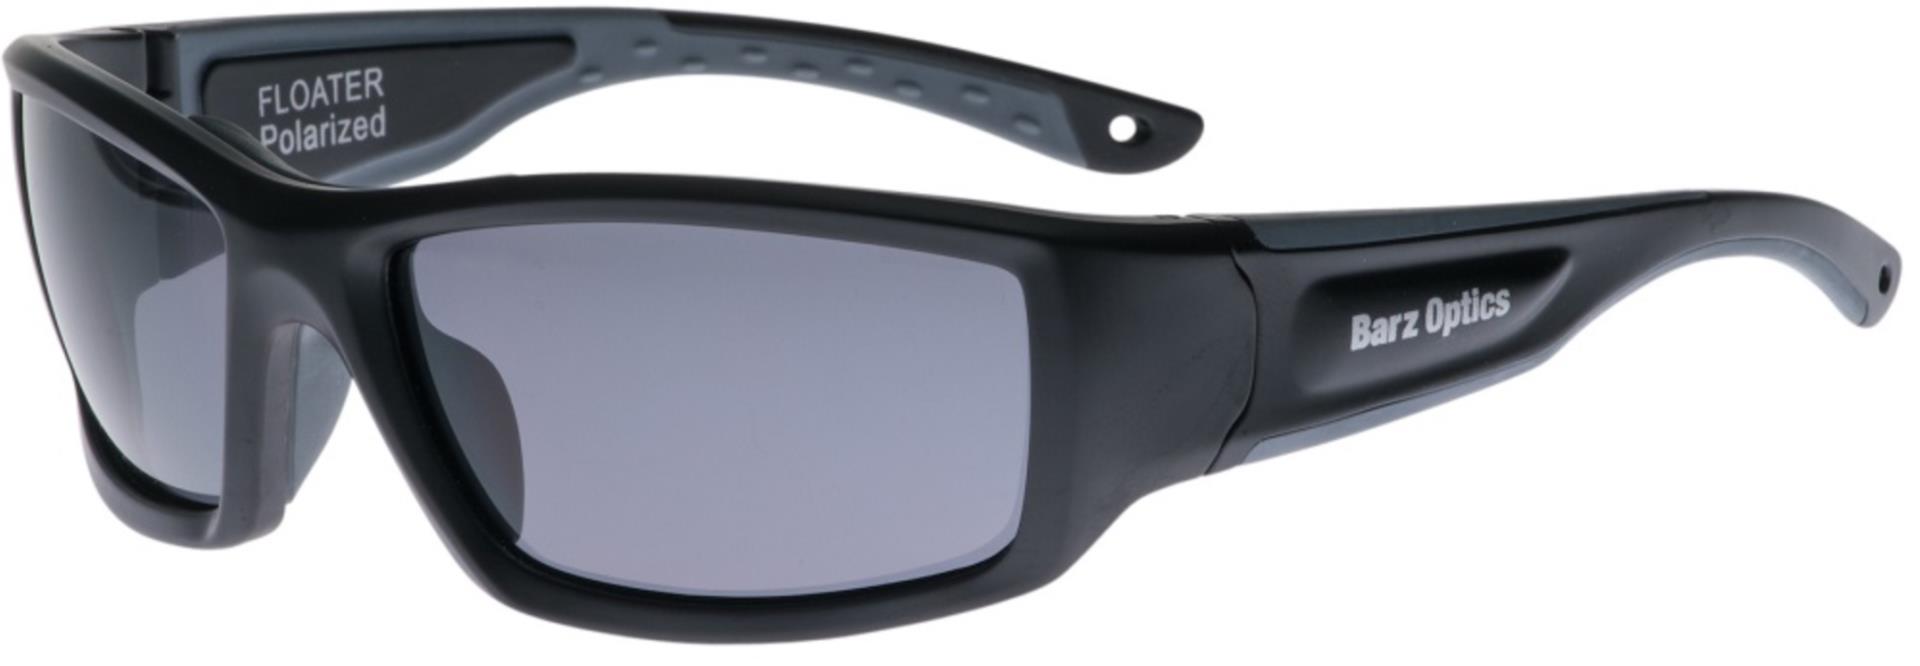 Sonnenbrille Barz Optic grau Lesebrille +2,5